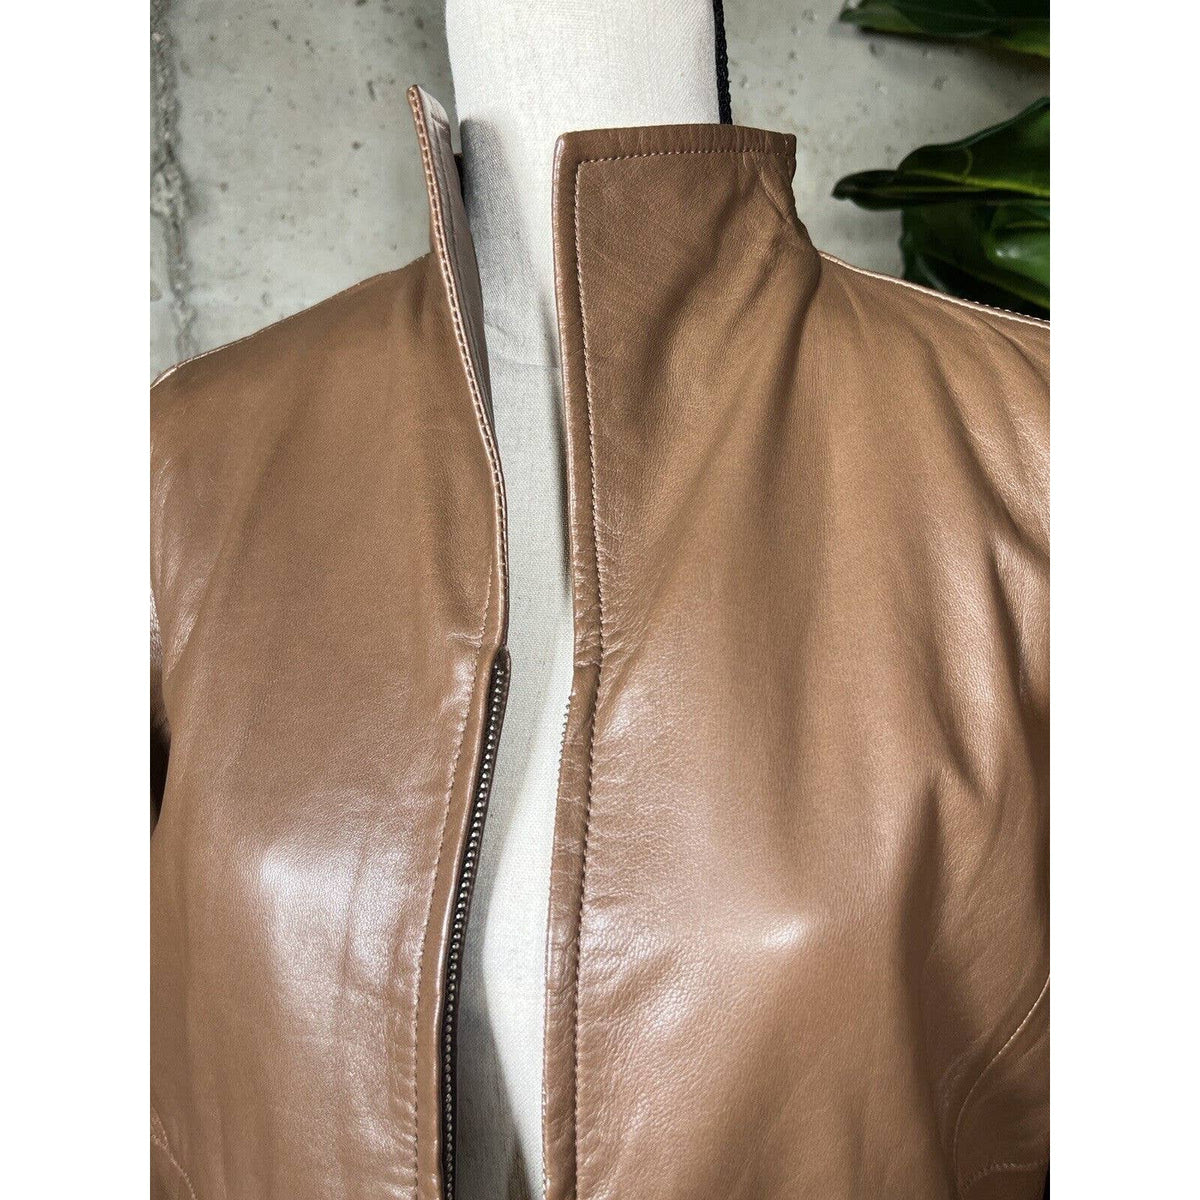 Weekend Max Mara Brown 100% Lamb Leather Jacket Sz.4 NEW